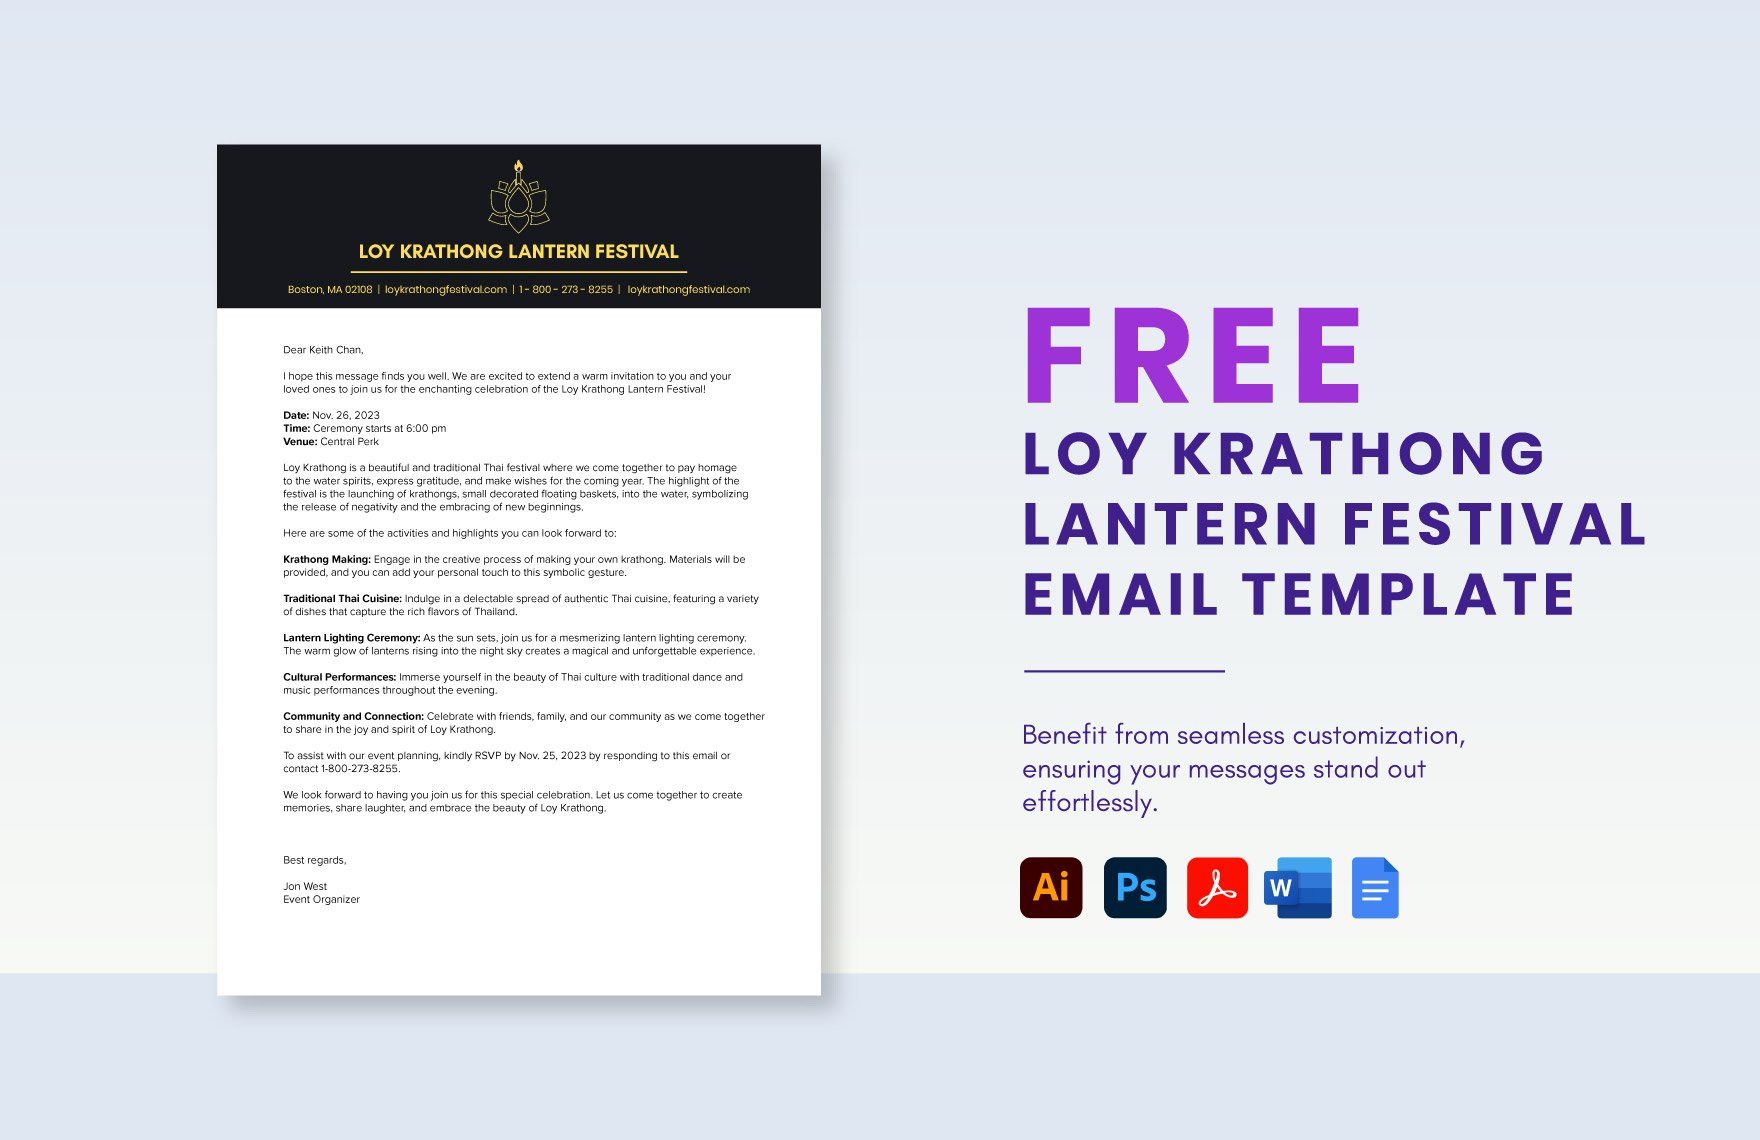 Loy Krathong Lantern Festival Email Template